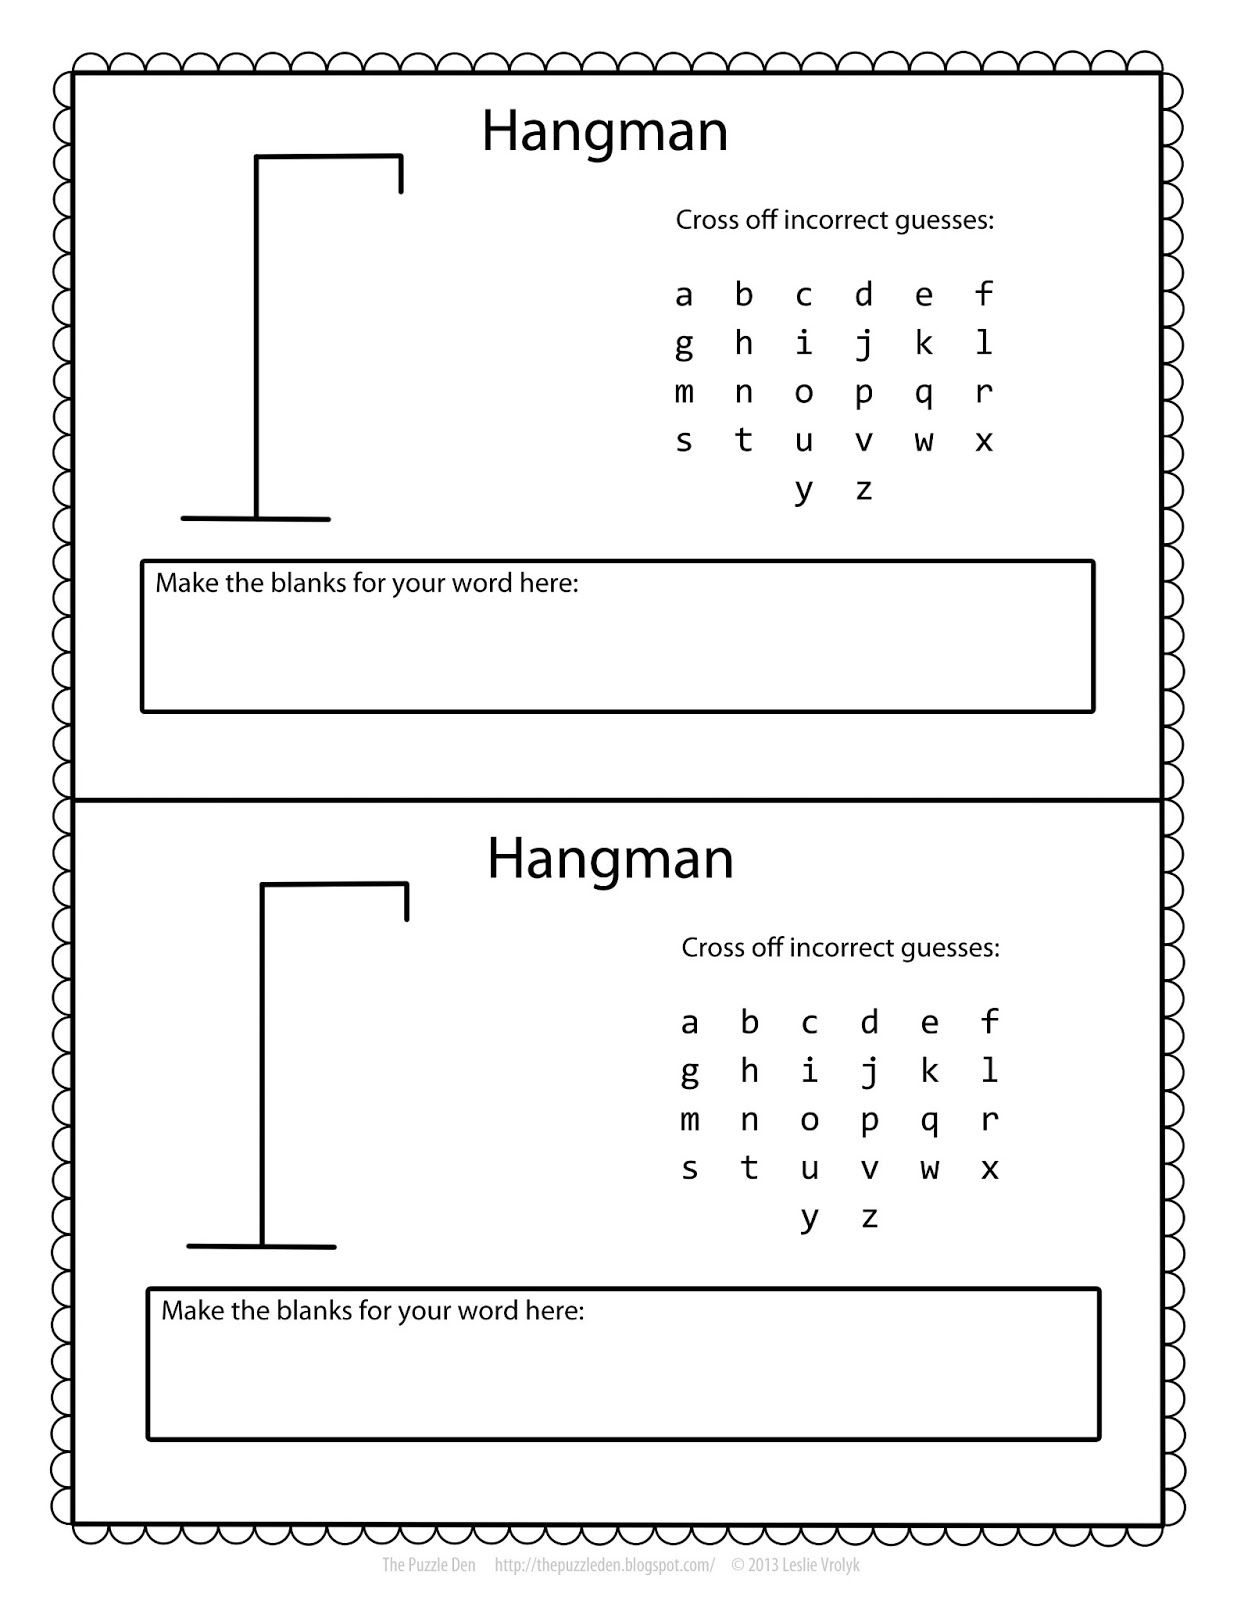 Free Hangman Template | Rna | Pinterest | Activities, Games And - Free Printable Hangman Game